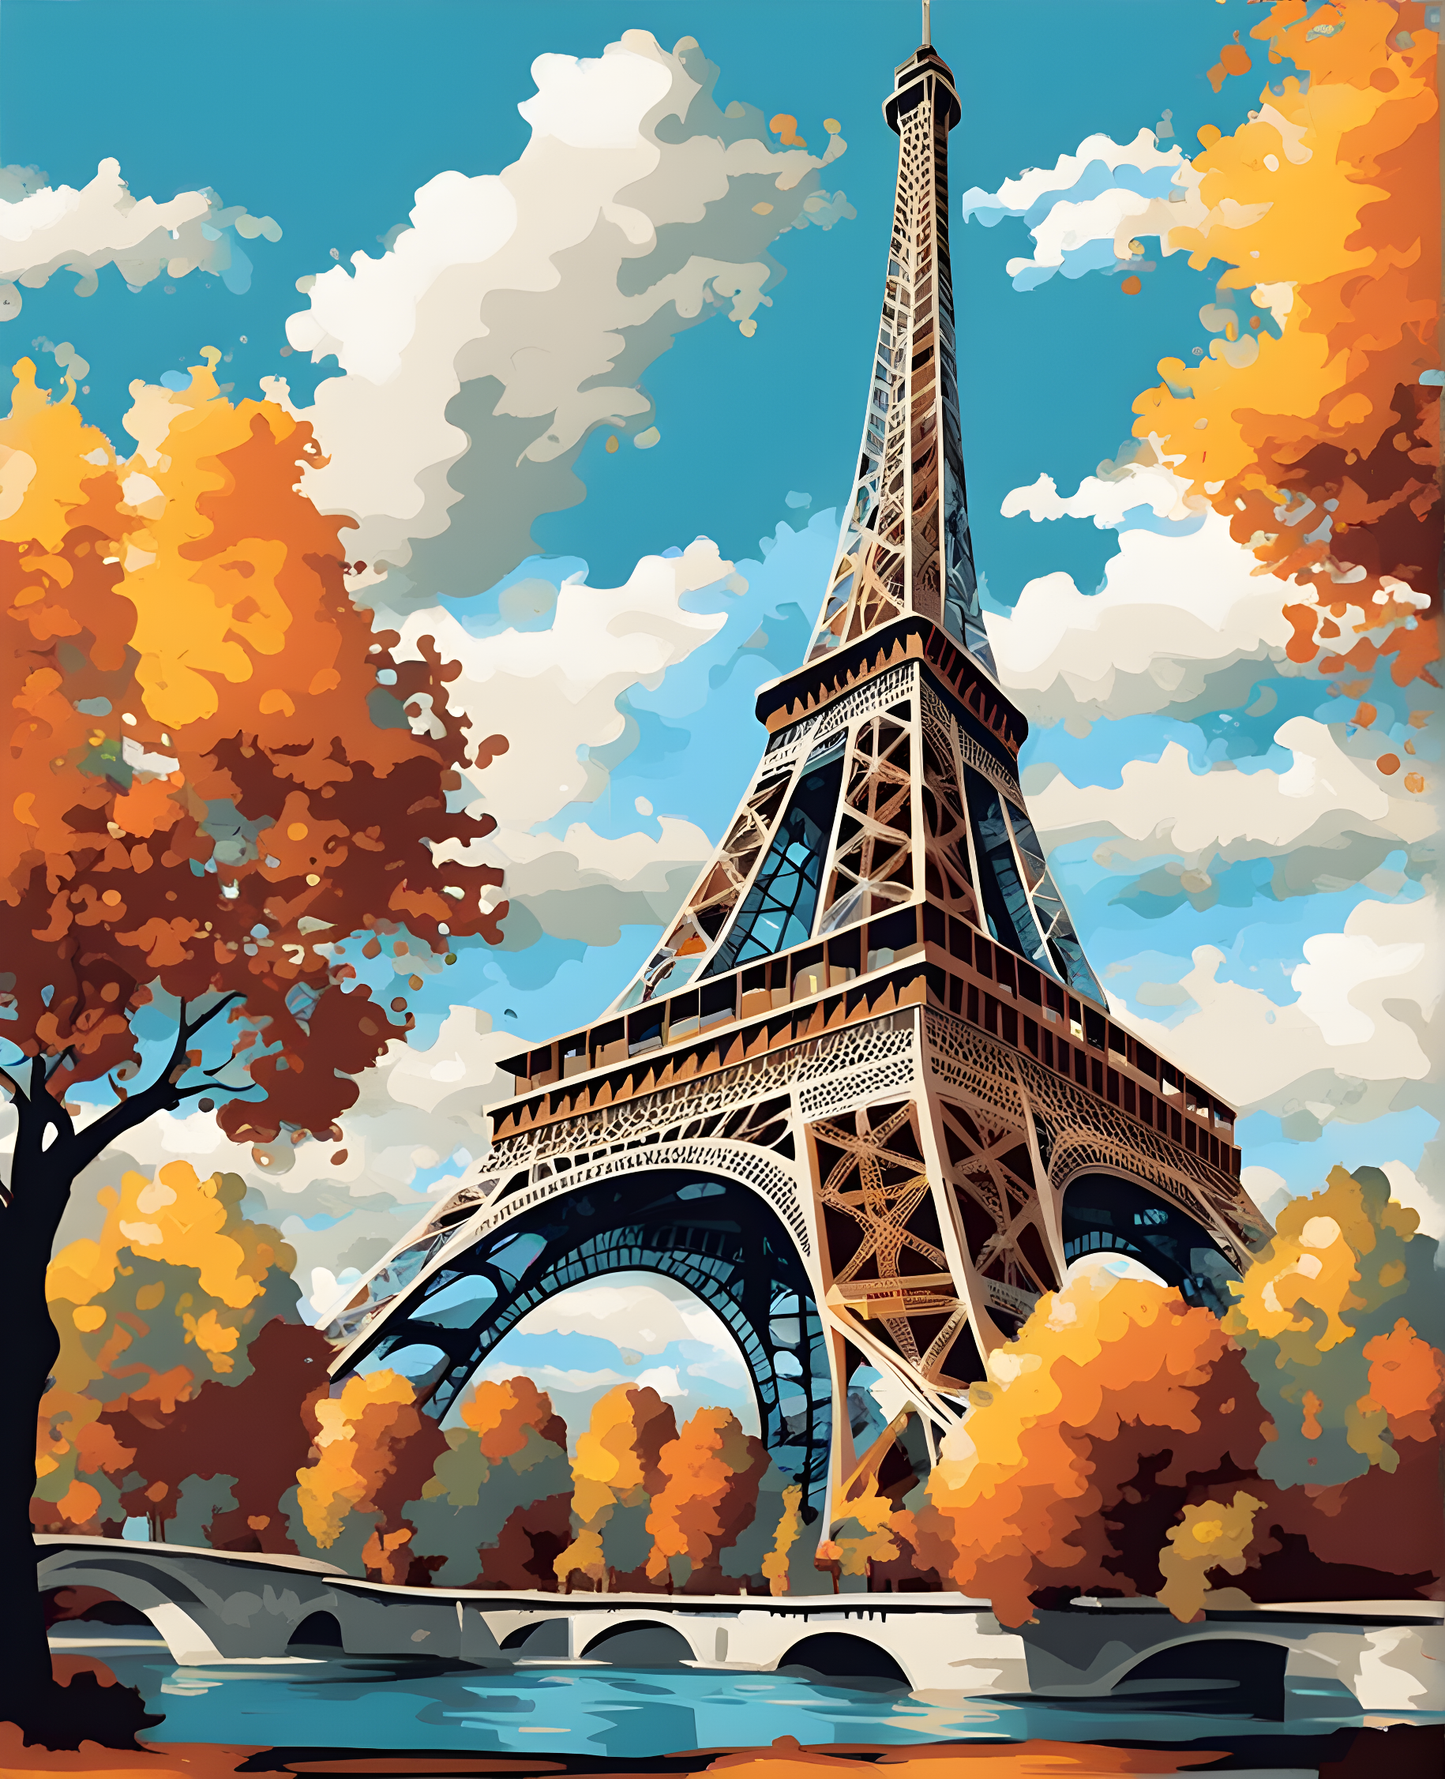 Eiffel Tower, Paris (2) - Van-Go Paint-By-Number Kit